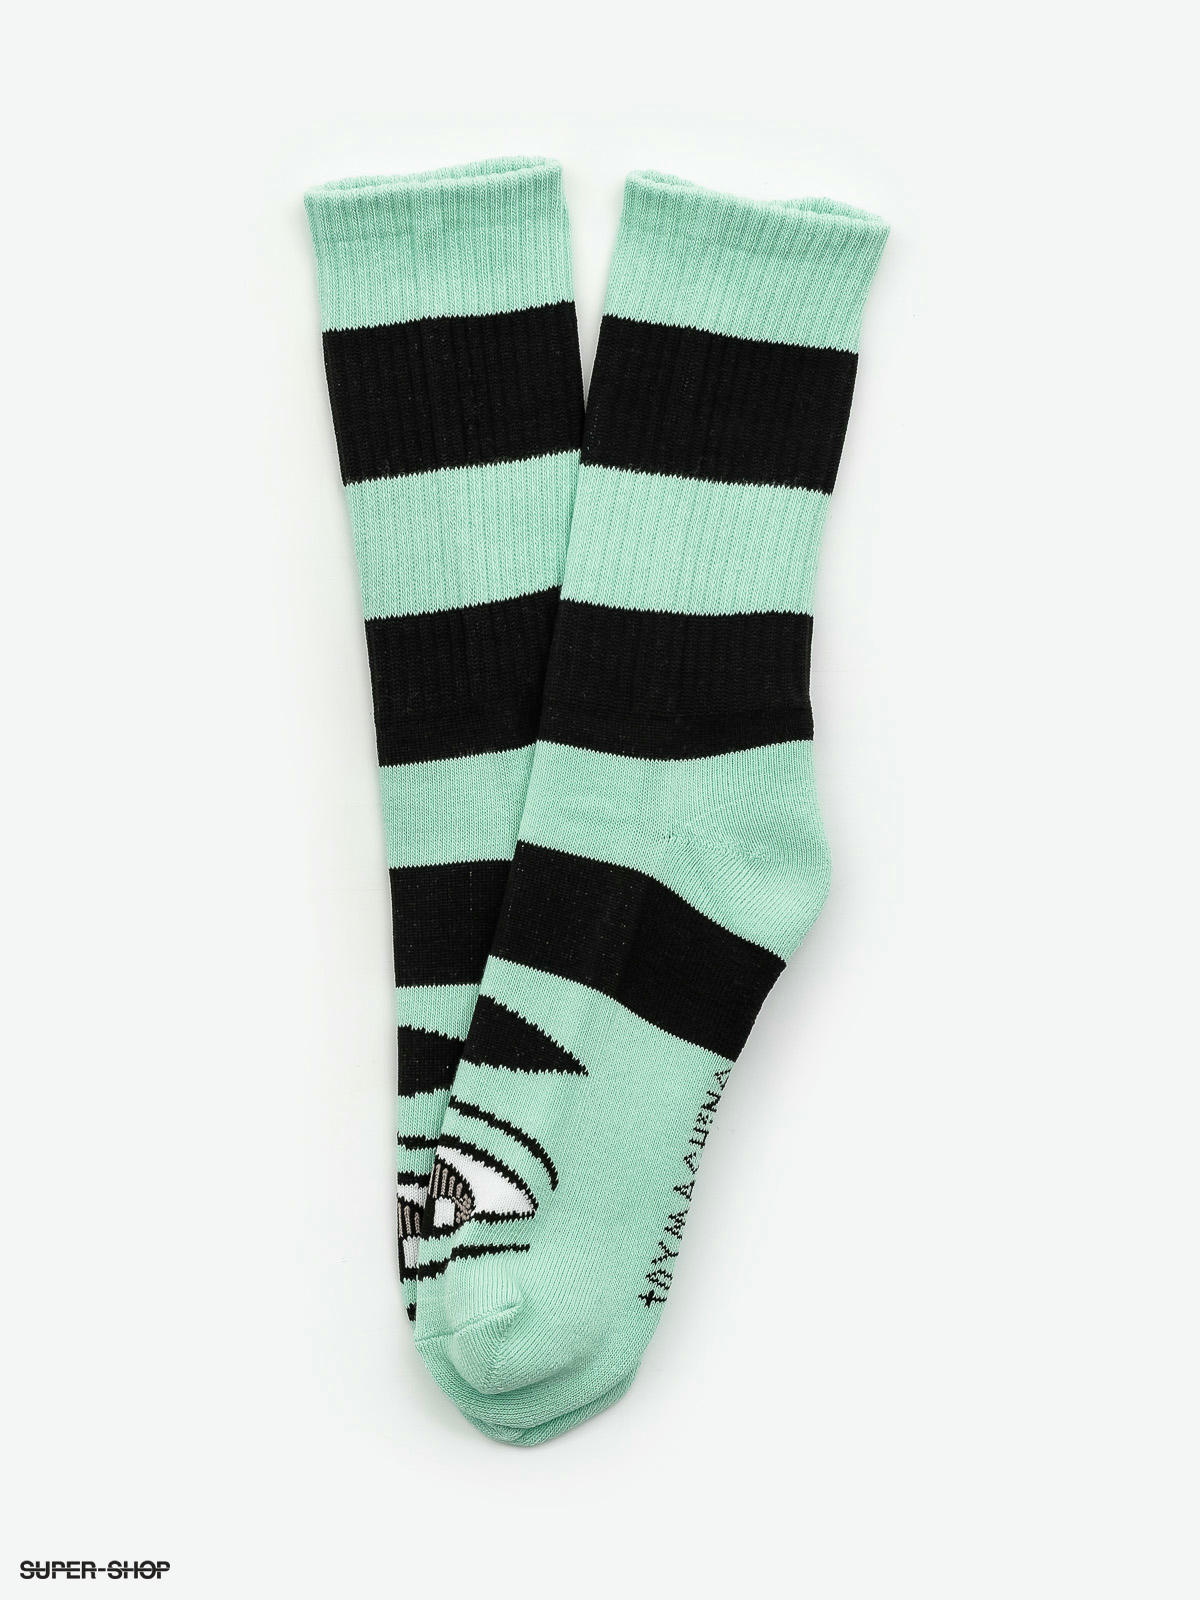 mint color socks